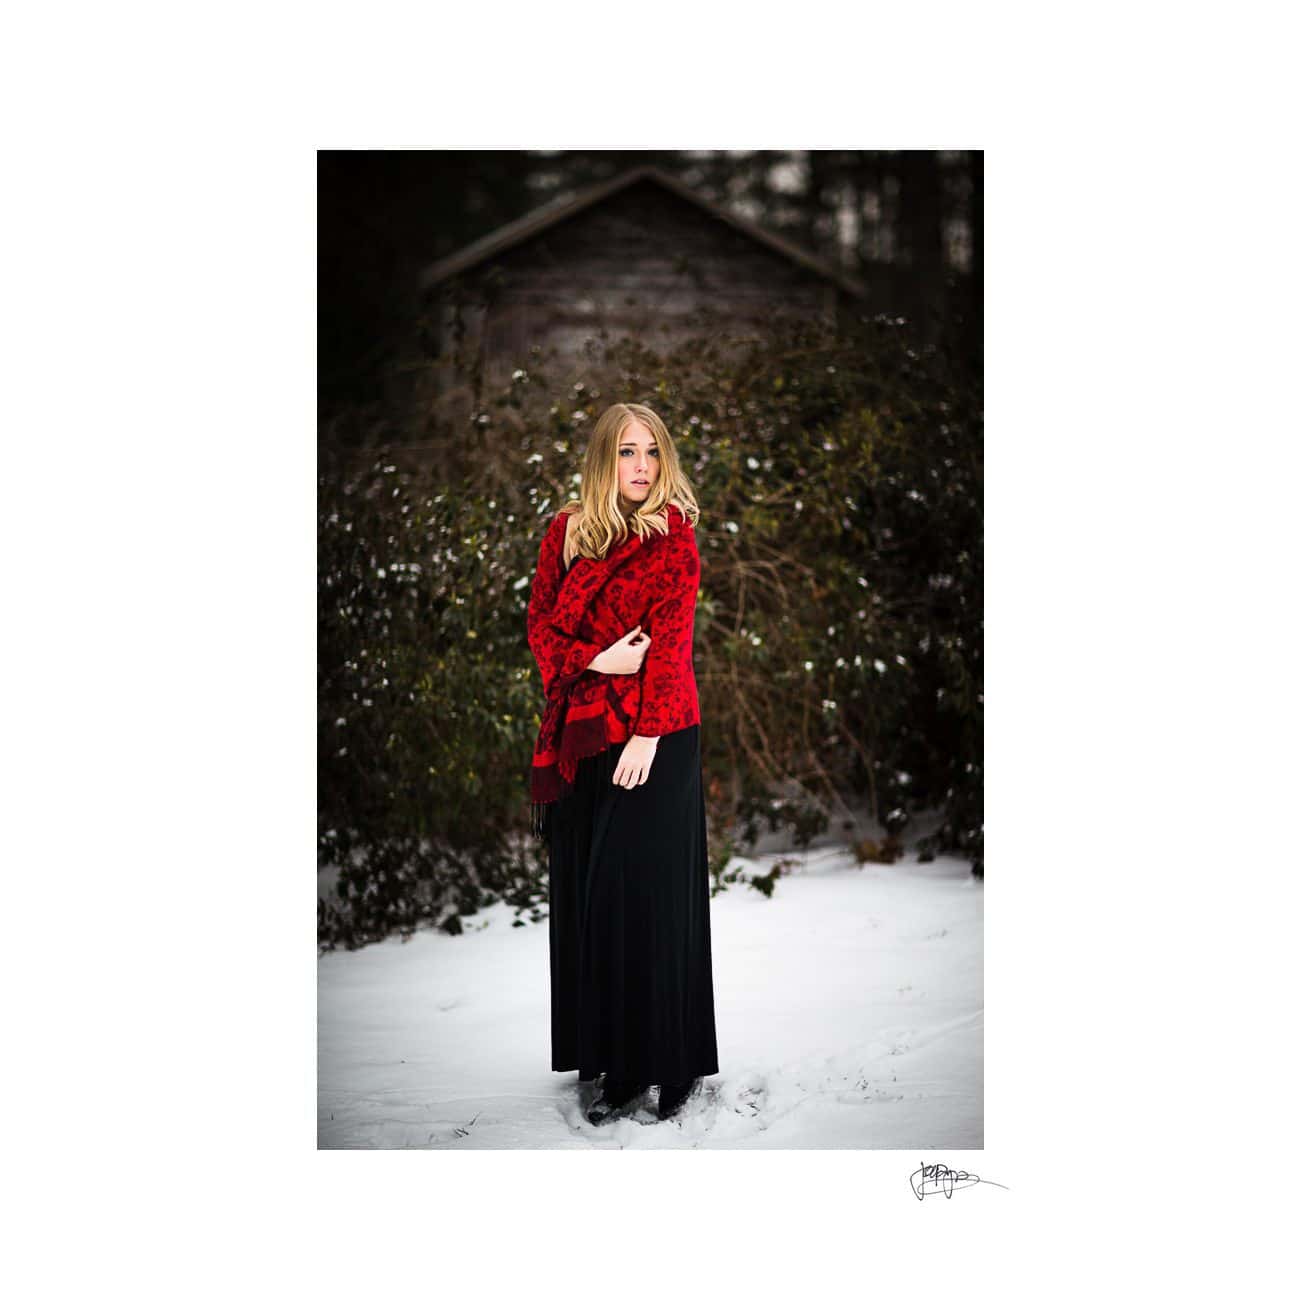 raleigh portrait photography - sonia's sense of snow